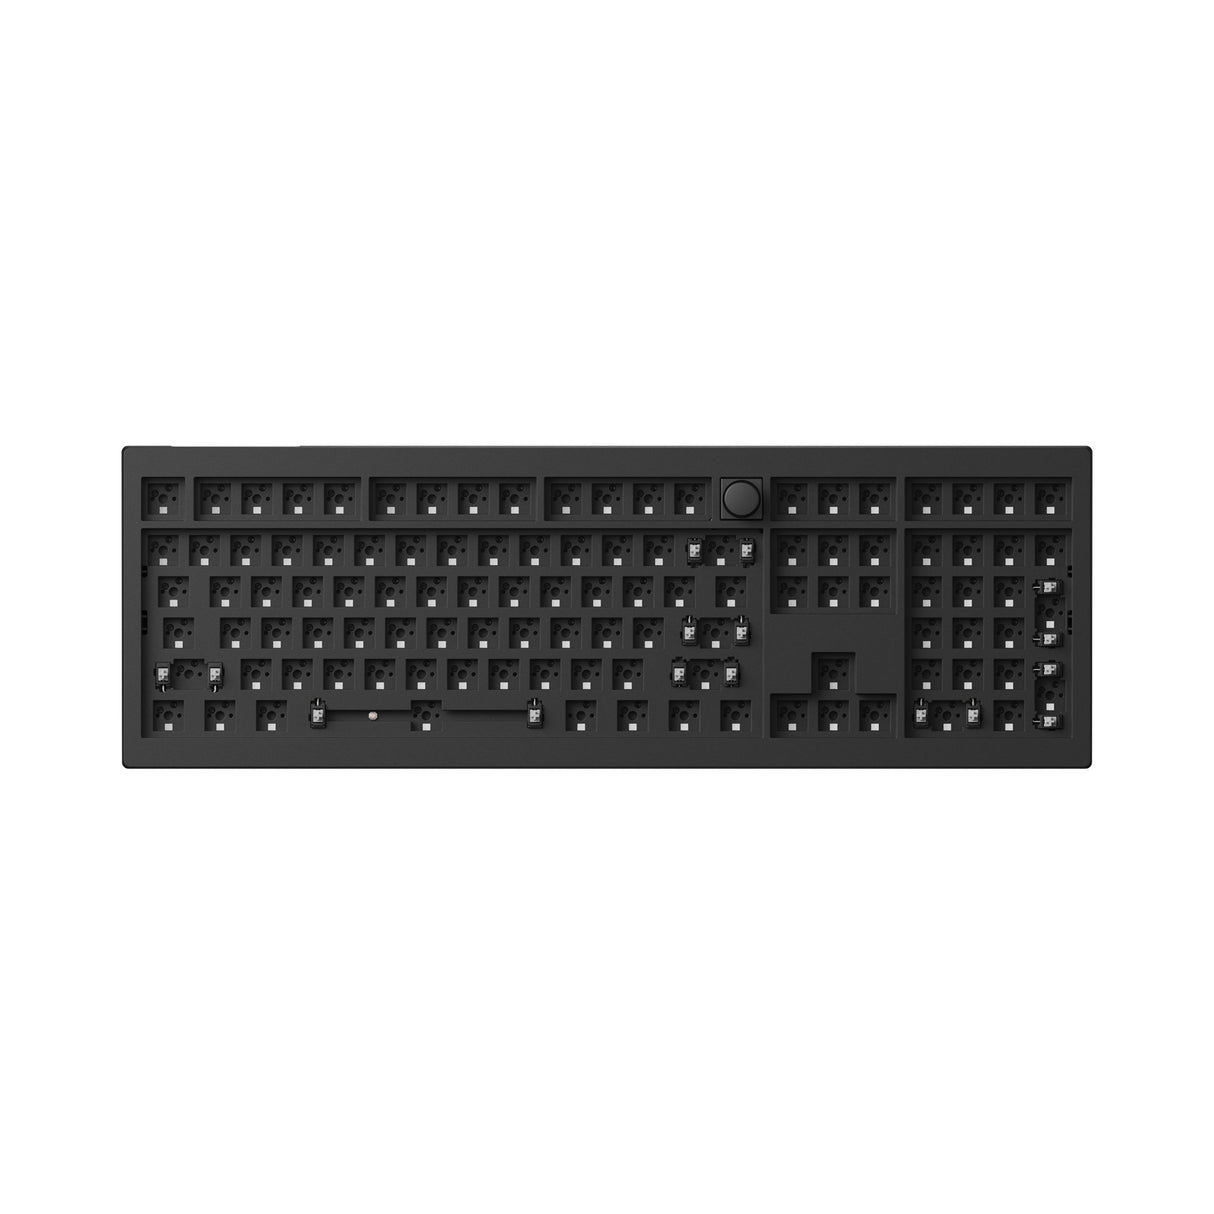 Keychron V6 Max QMK/VIA Wireless Custom Mechanical Keyboard full-size Layout for Mac Windows Linux Barebone